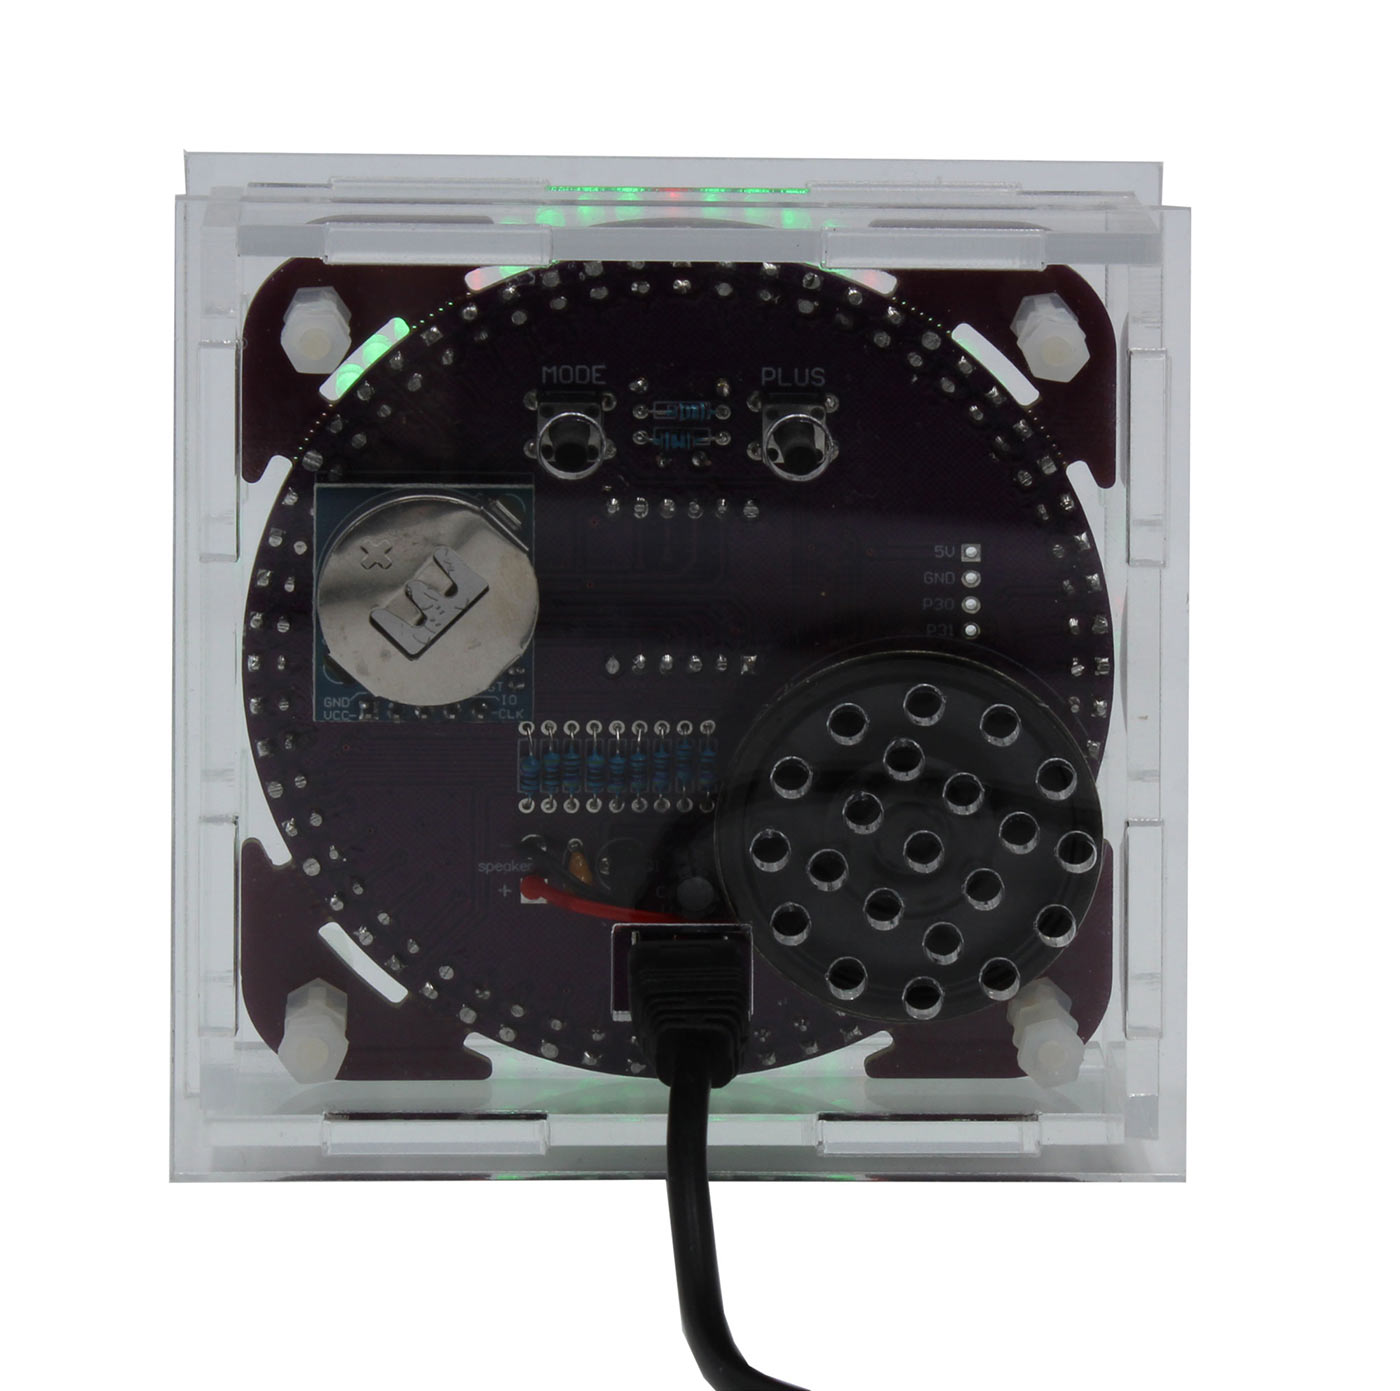 Bausatz Digitale Rotation LED Uhr mit Gehäuse DS1302 DIY-Elektronik Löten